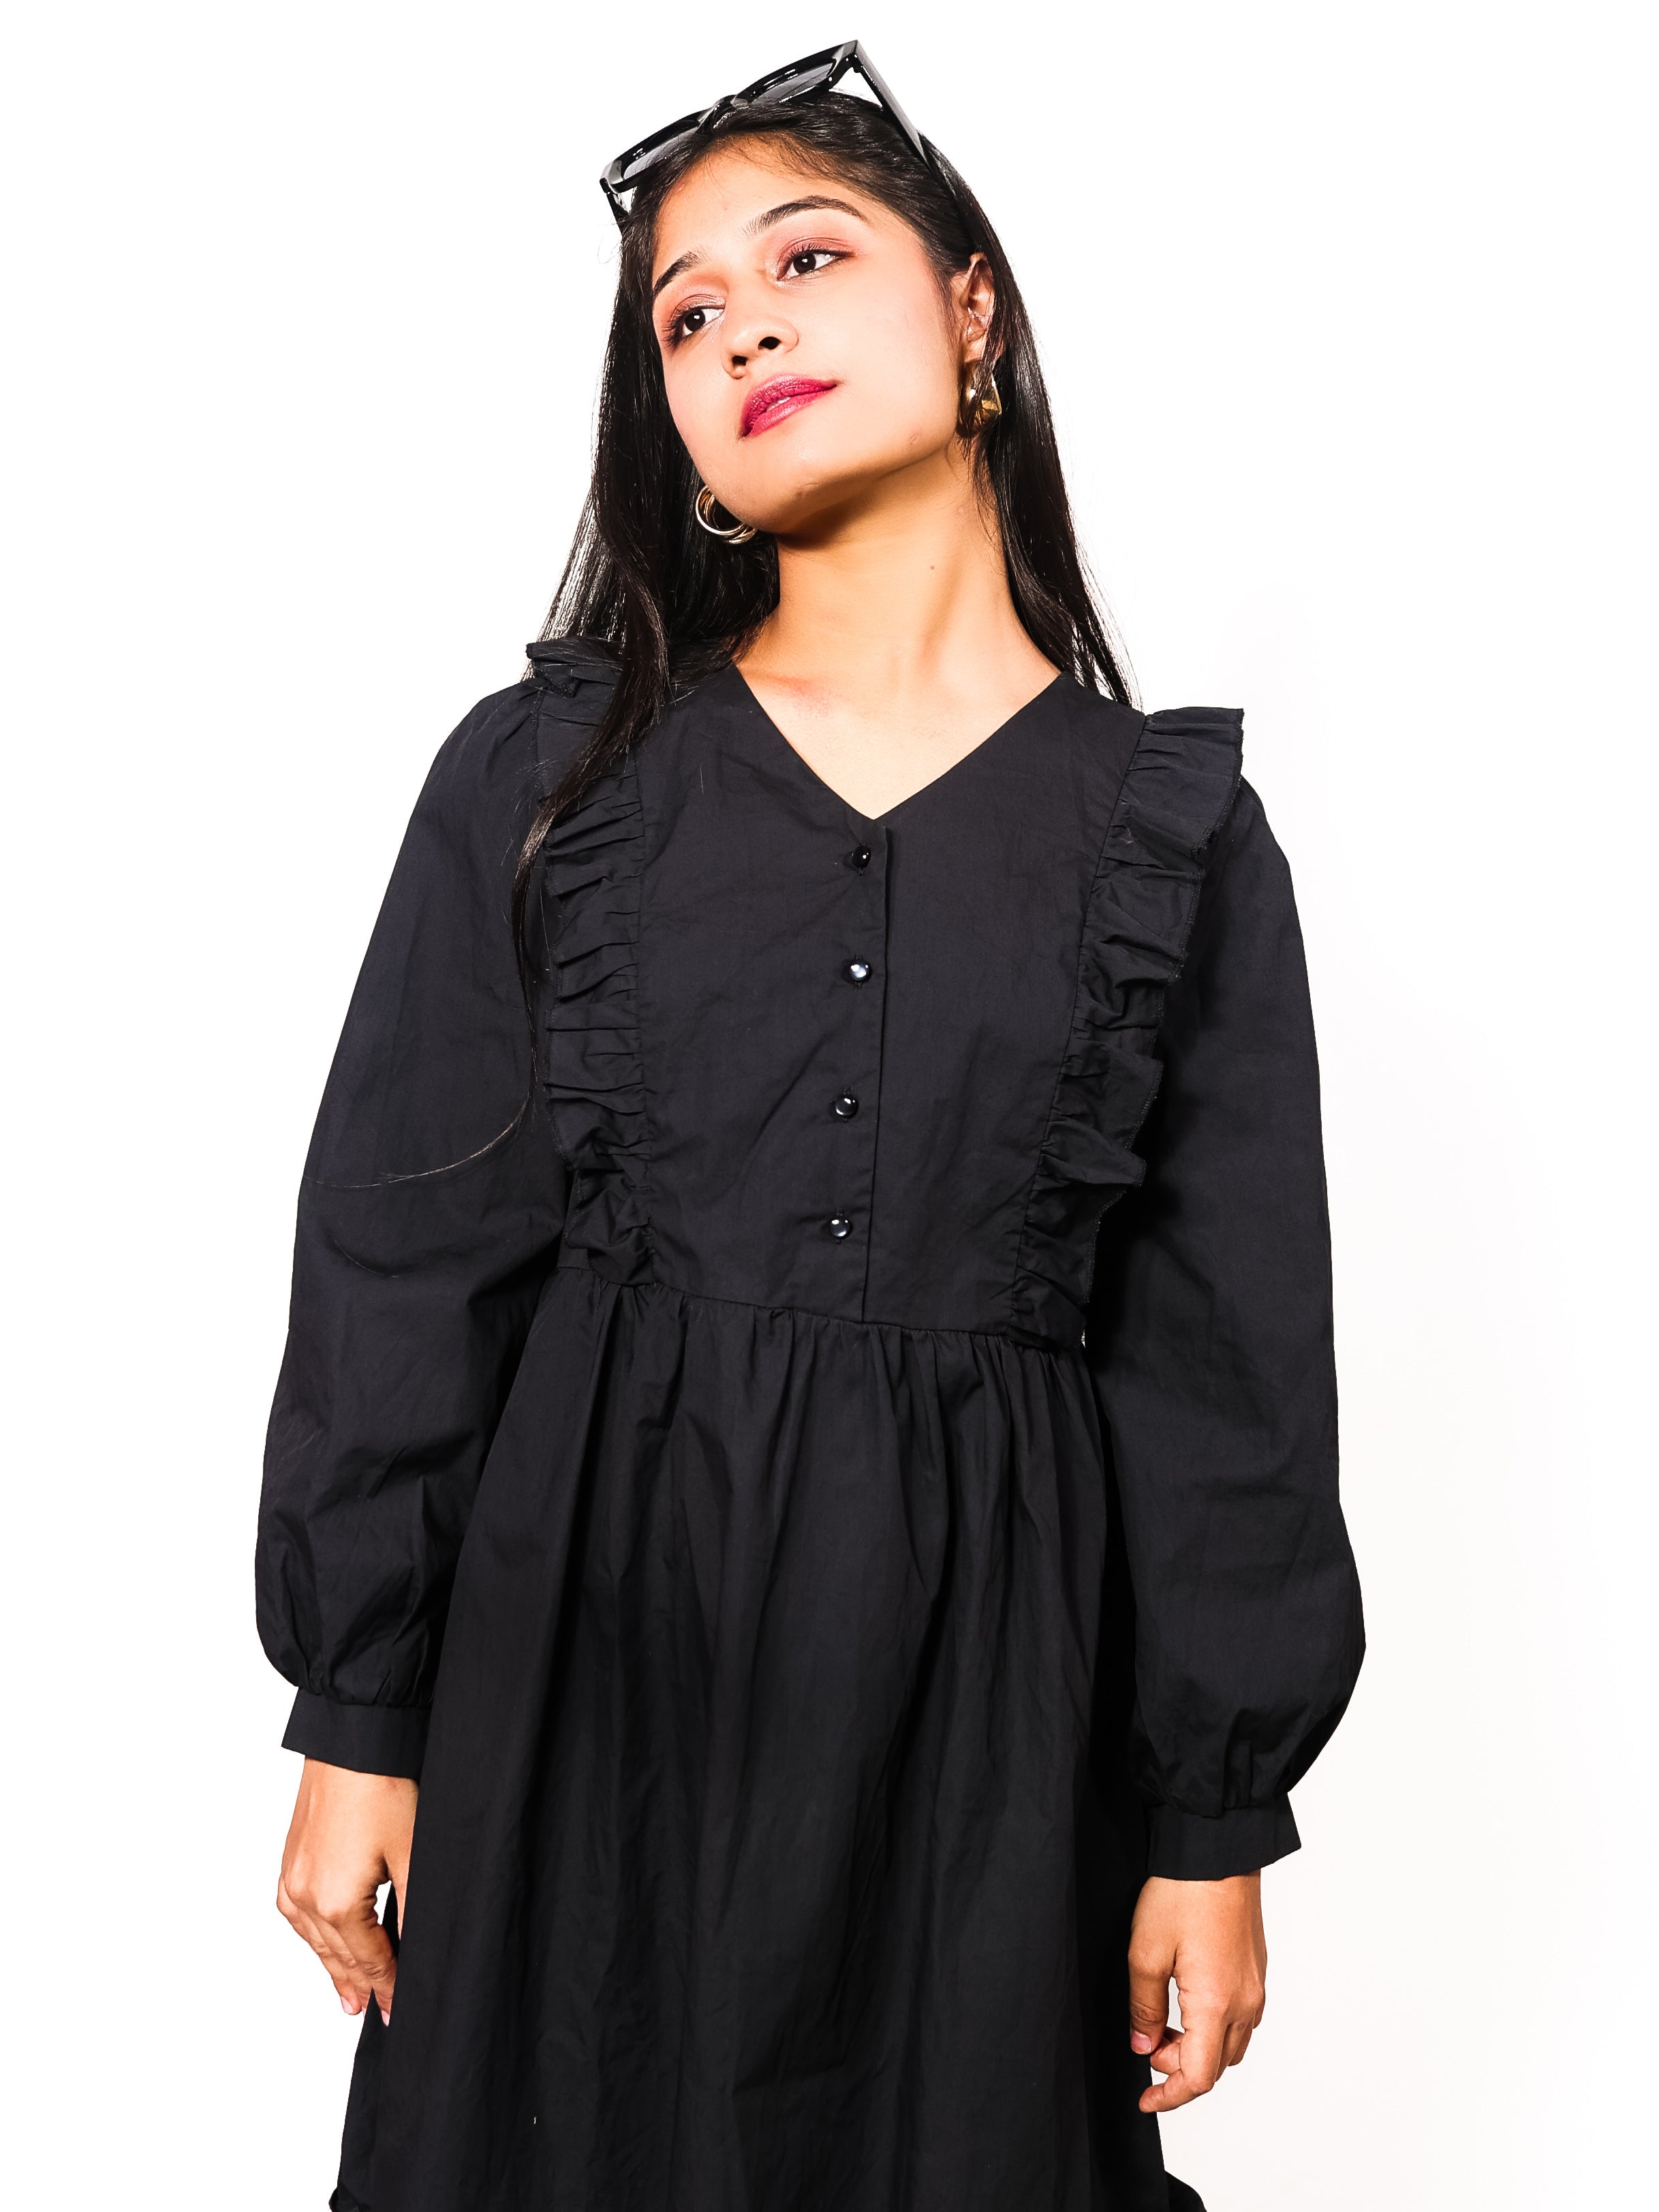 Ruffled Black Dress - 0433